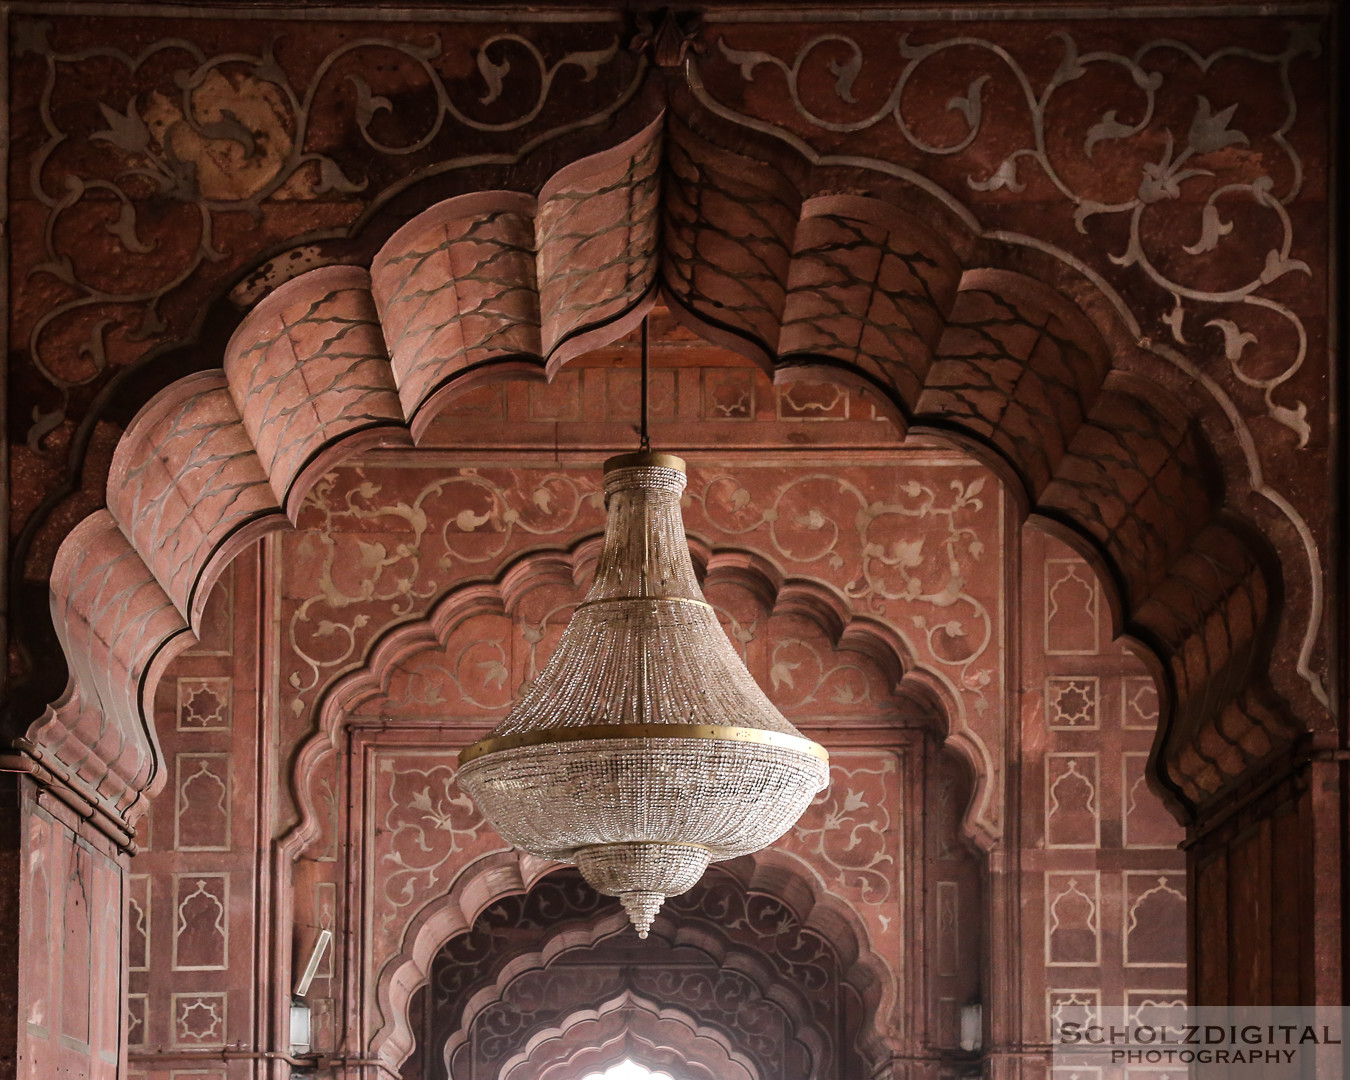 Asien, India, Indien, Jama Masjid in Delhi, Moschee, Shahjahanabad